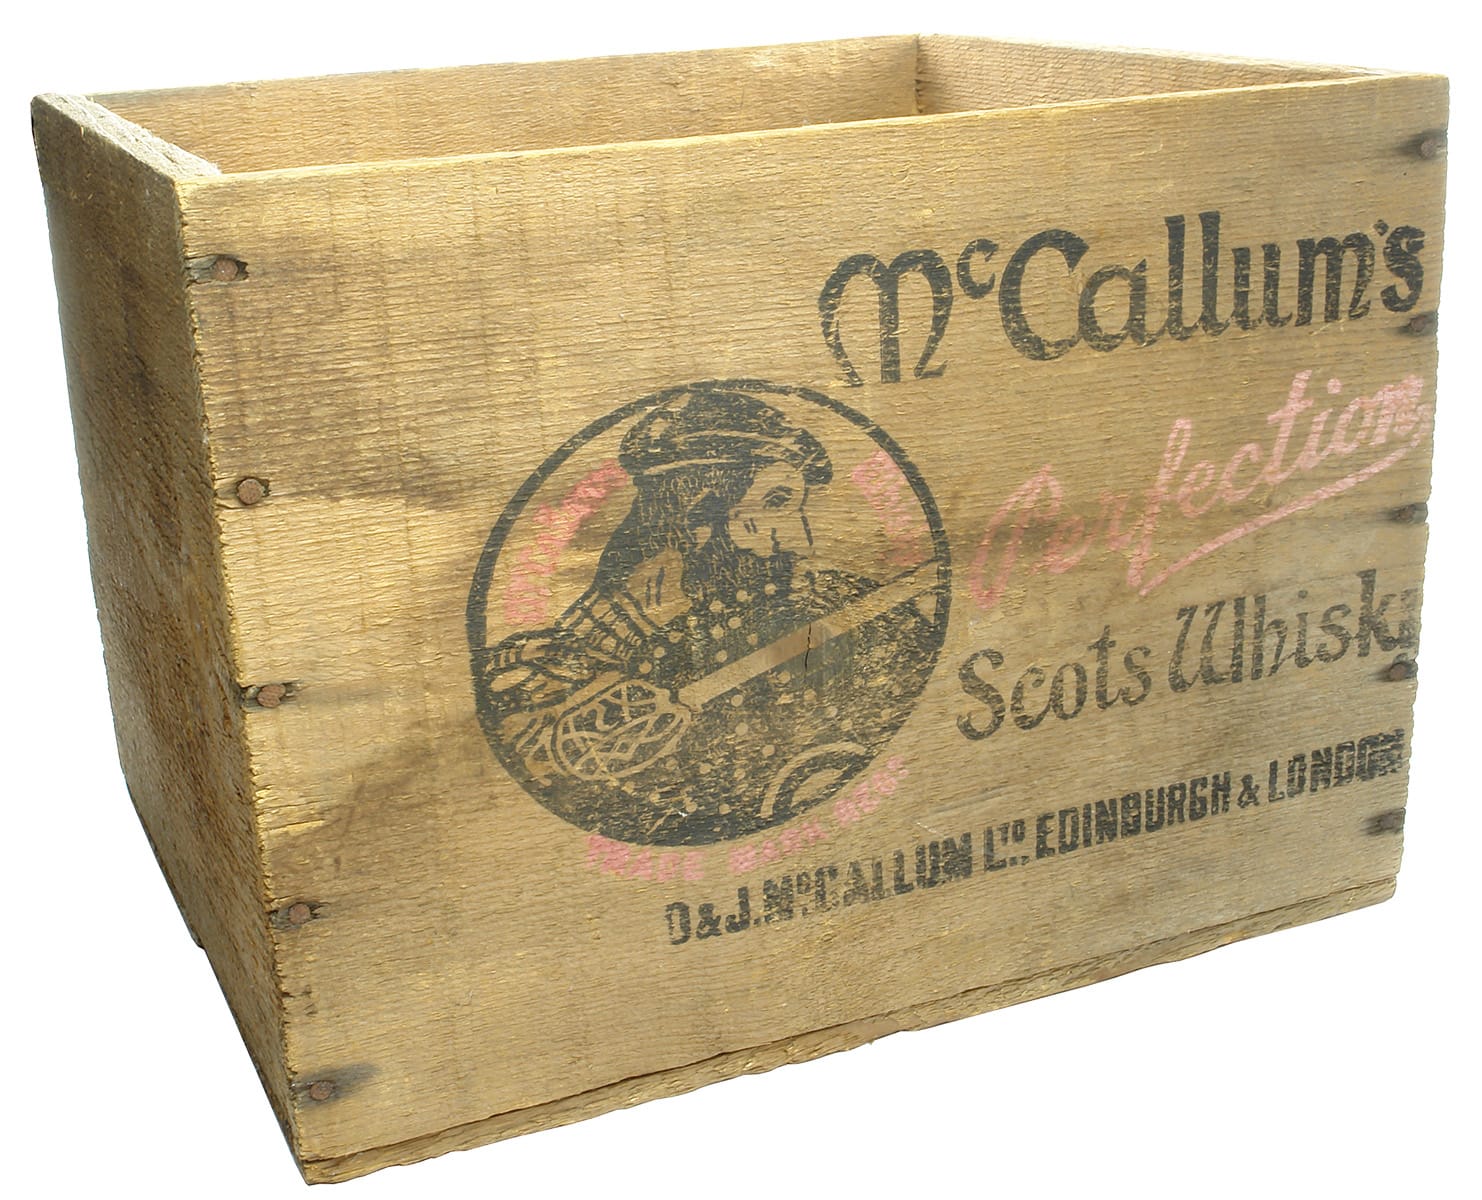 McCallum's Perfection Scots Whisky Box